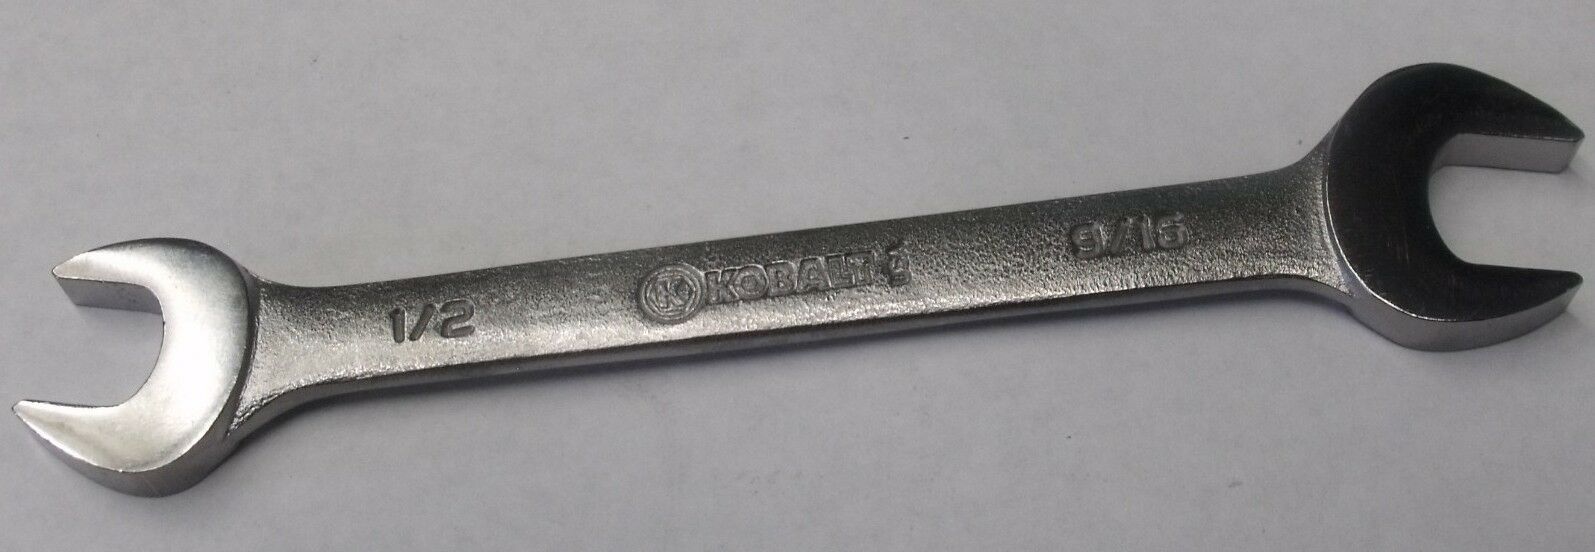 Kobalt 23532  9/16" x 1/2" Open End Wrench USA